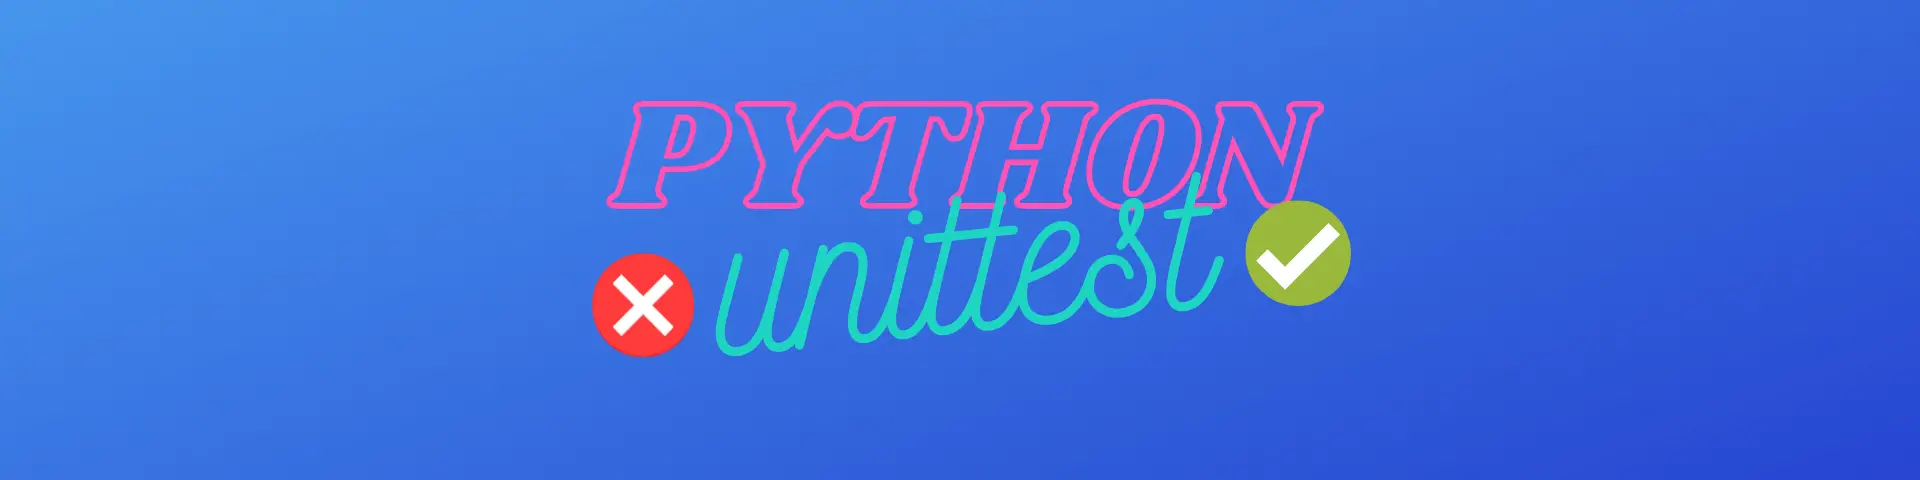 python unittest